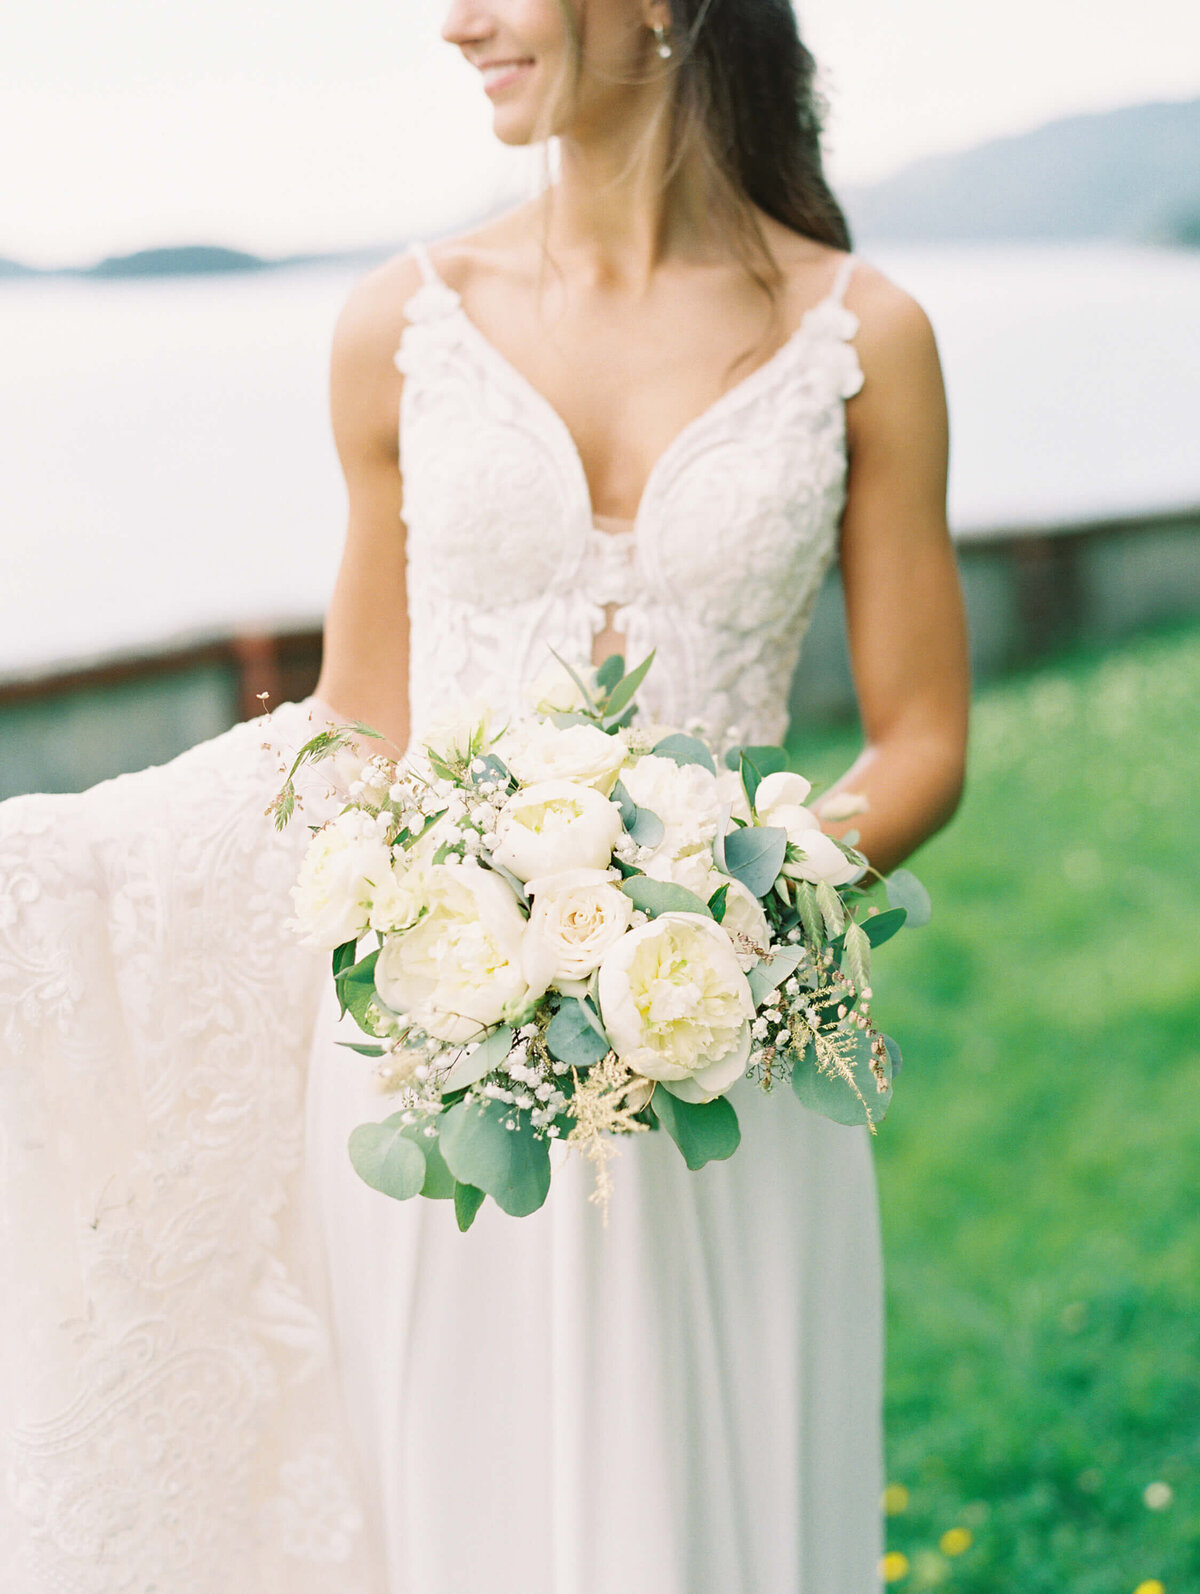 Lisa-Leanne-Photography_Bergen-Norway-Wedding_International-Wedding-Photographer_Destination-Wedding-Photographer_29